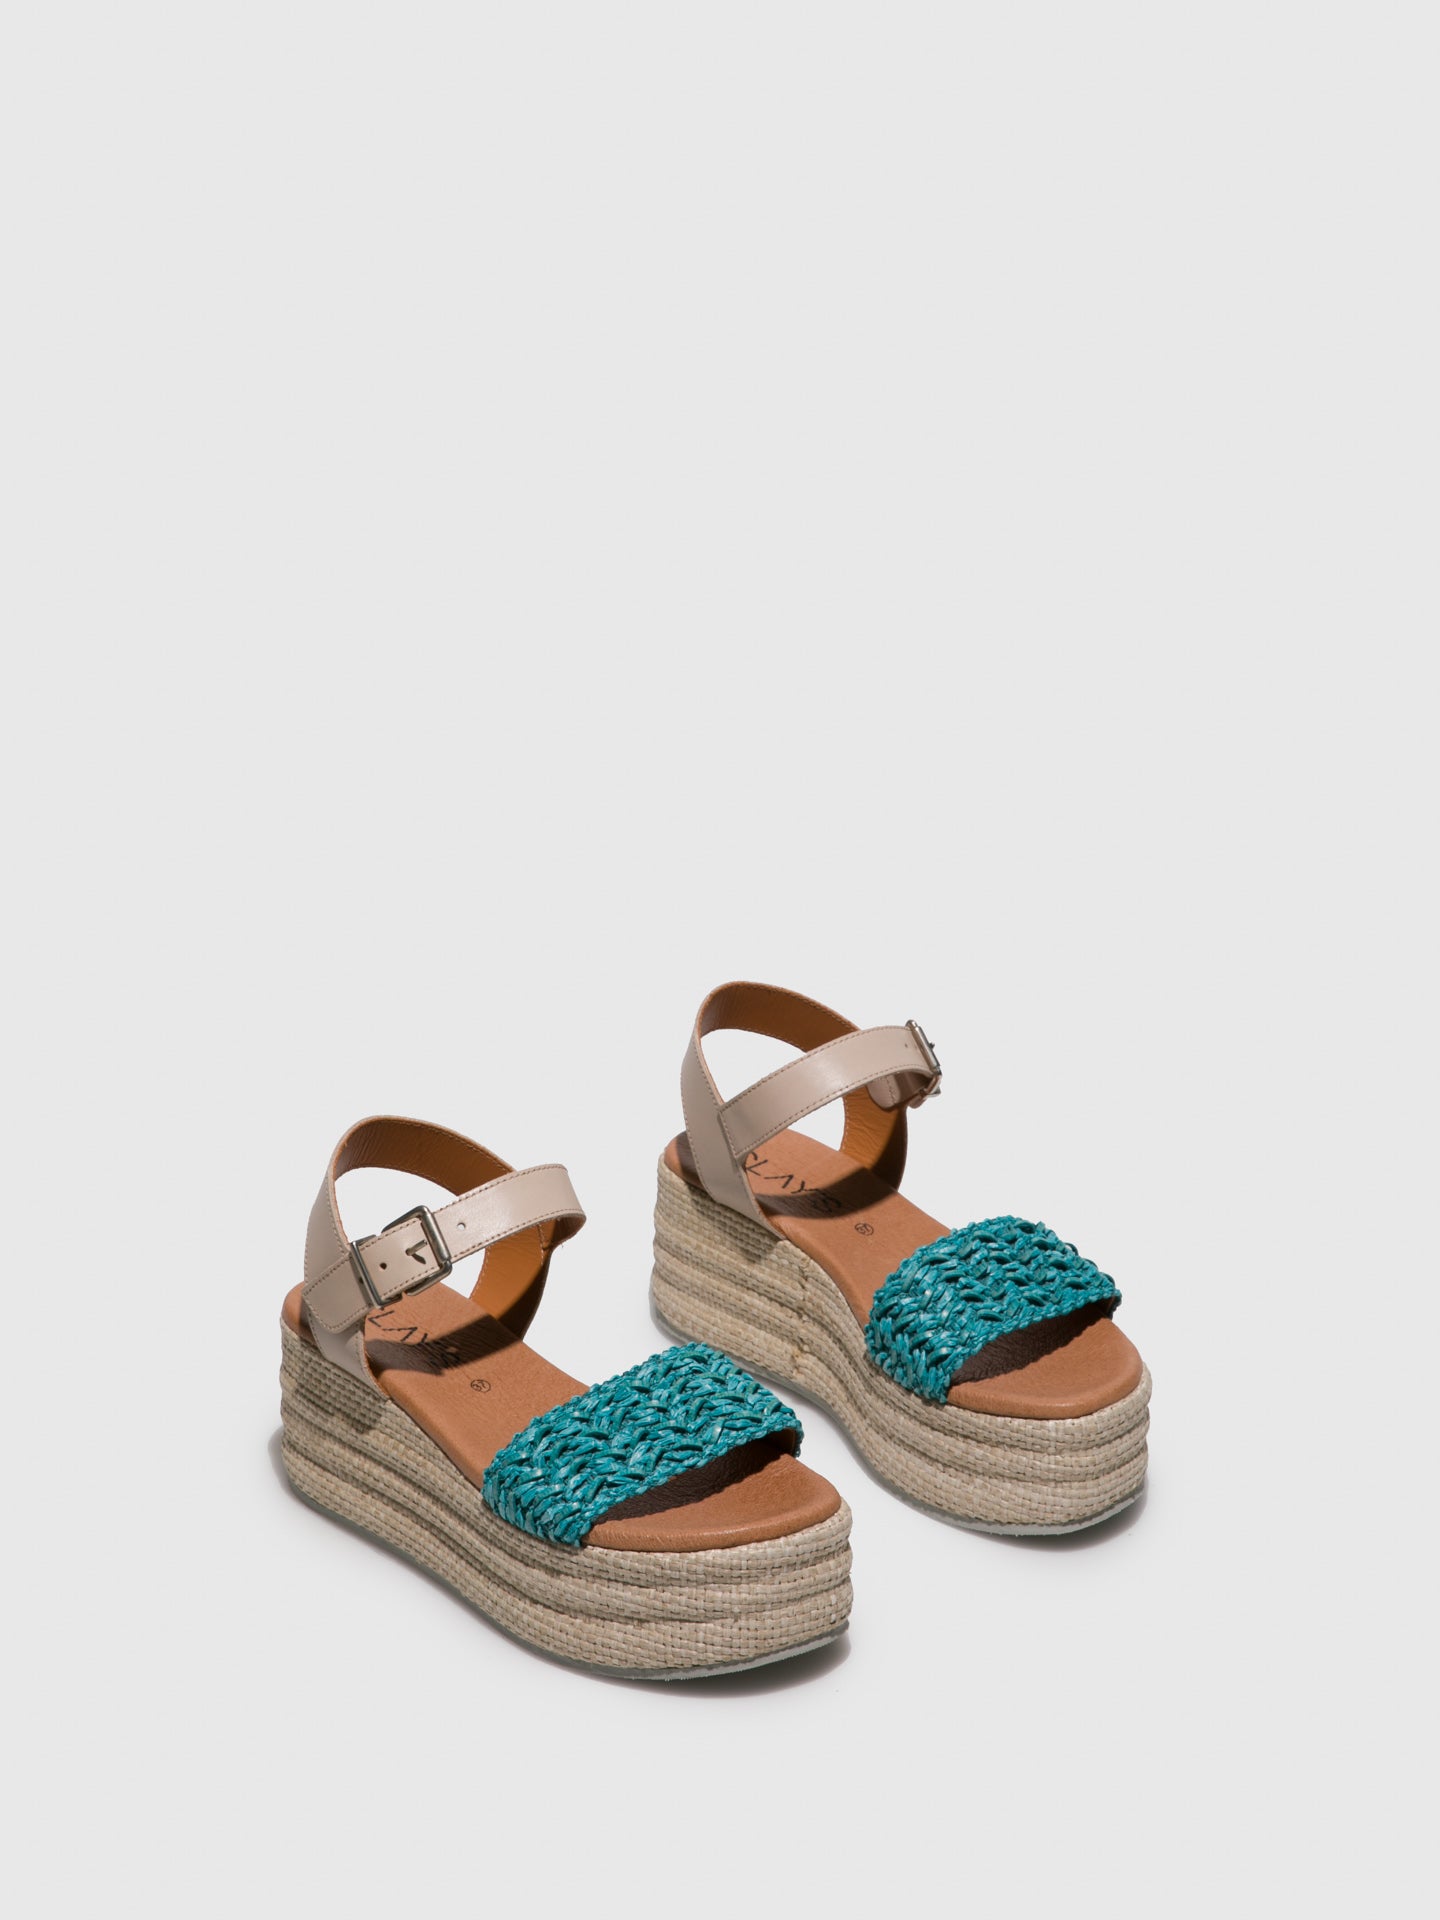 Clay's Turquoise Platform Sandals